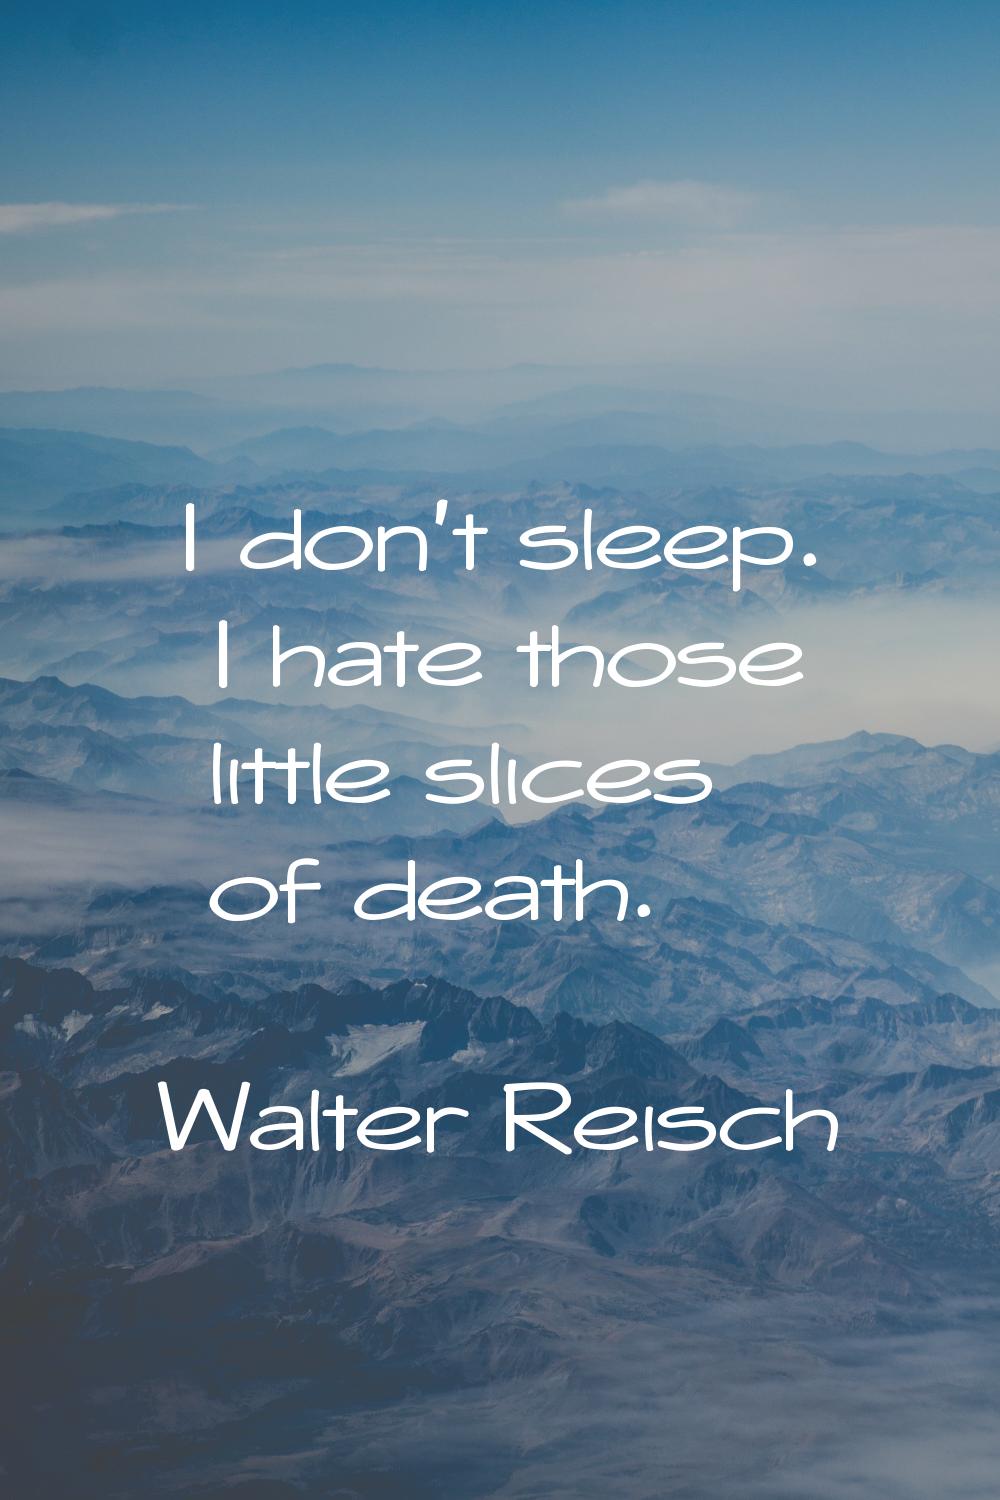 I don't sleep. I hate those little slices of death.